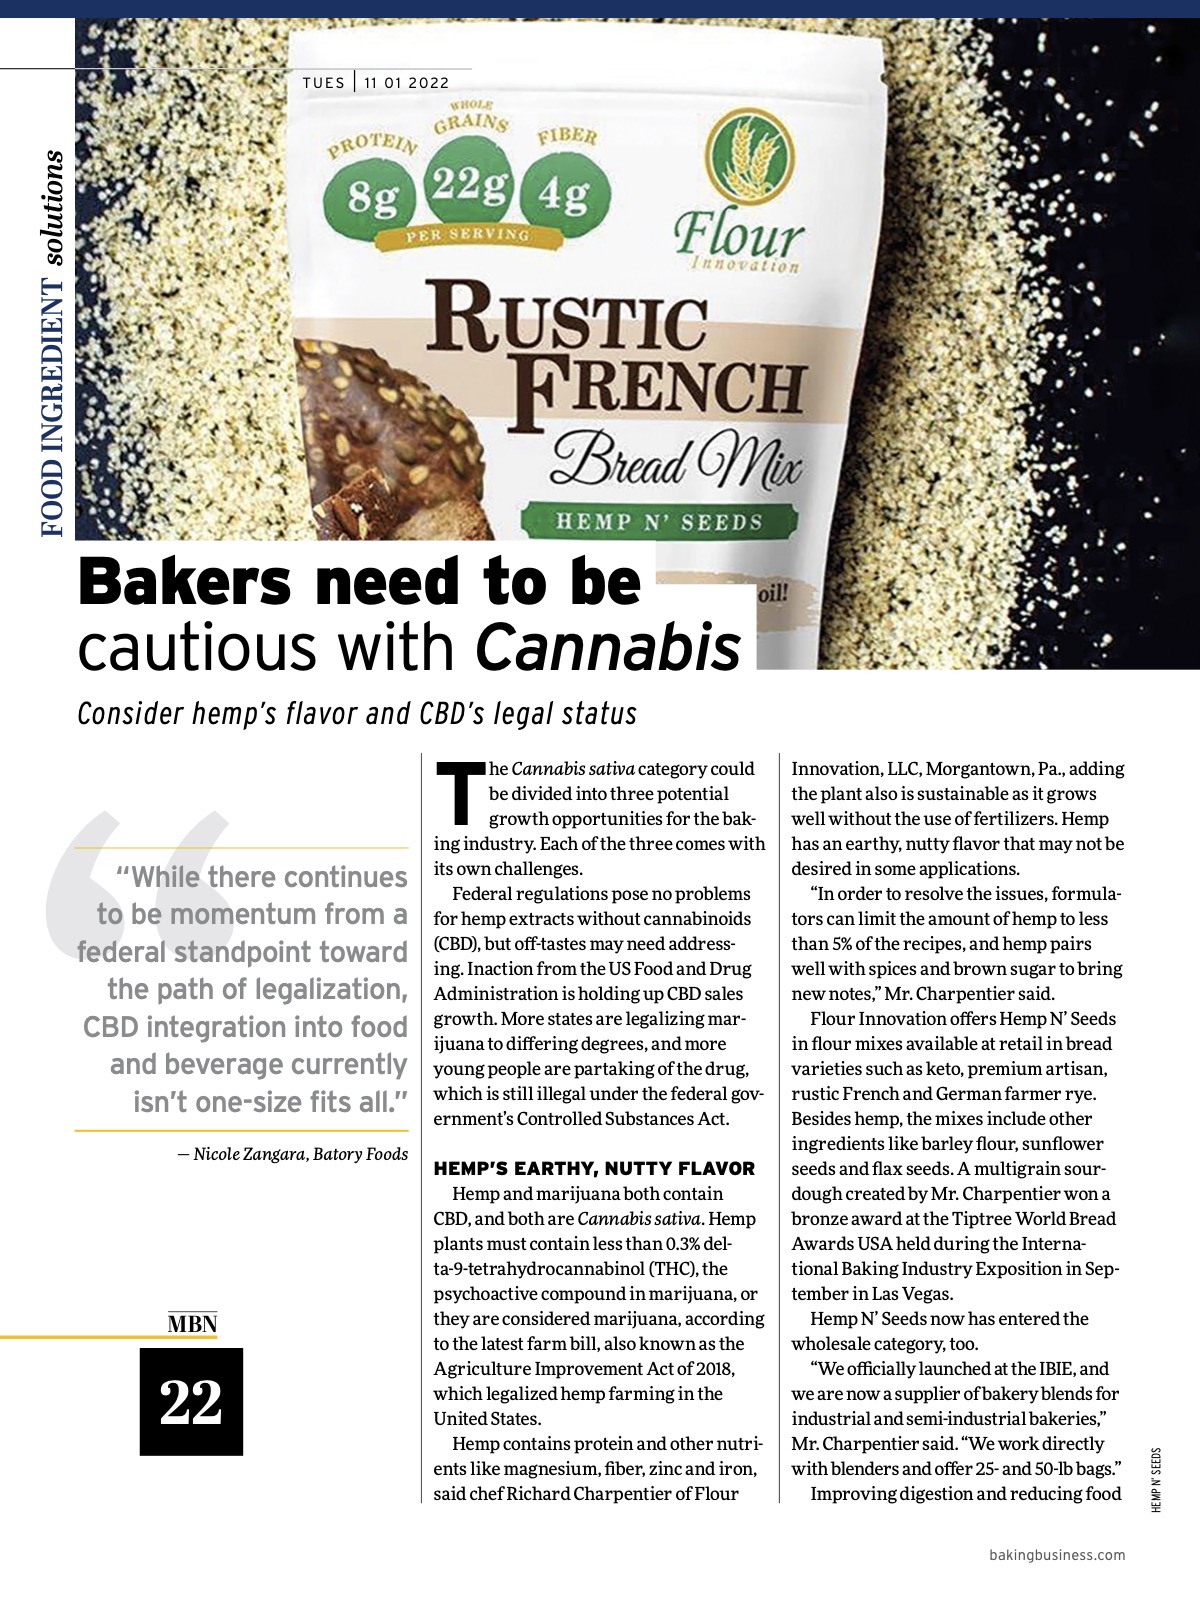 Milling & Baking News Mag - Cannabis Goods Trends - Nov 2022